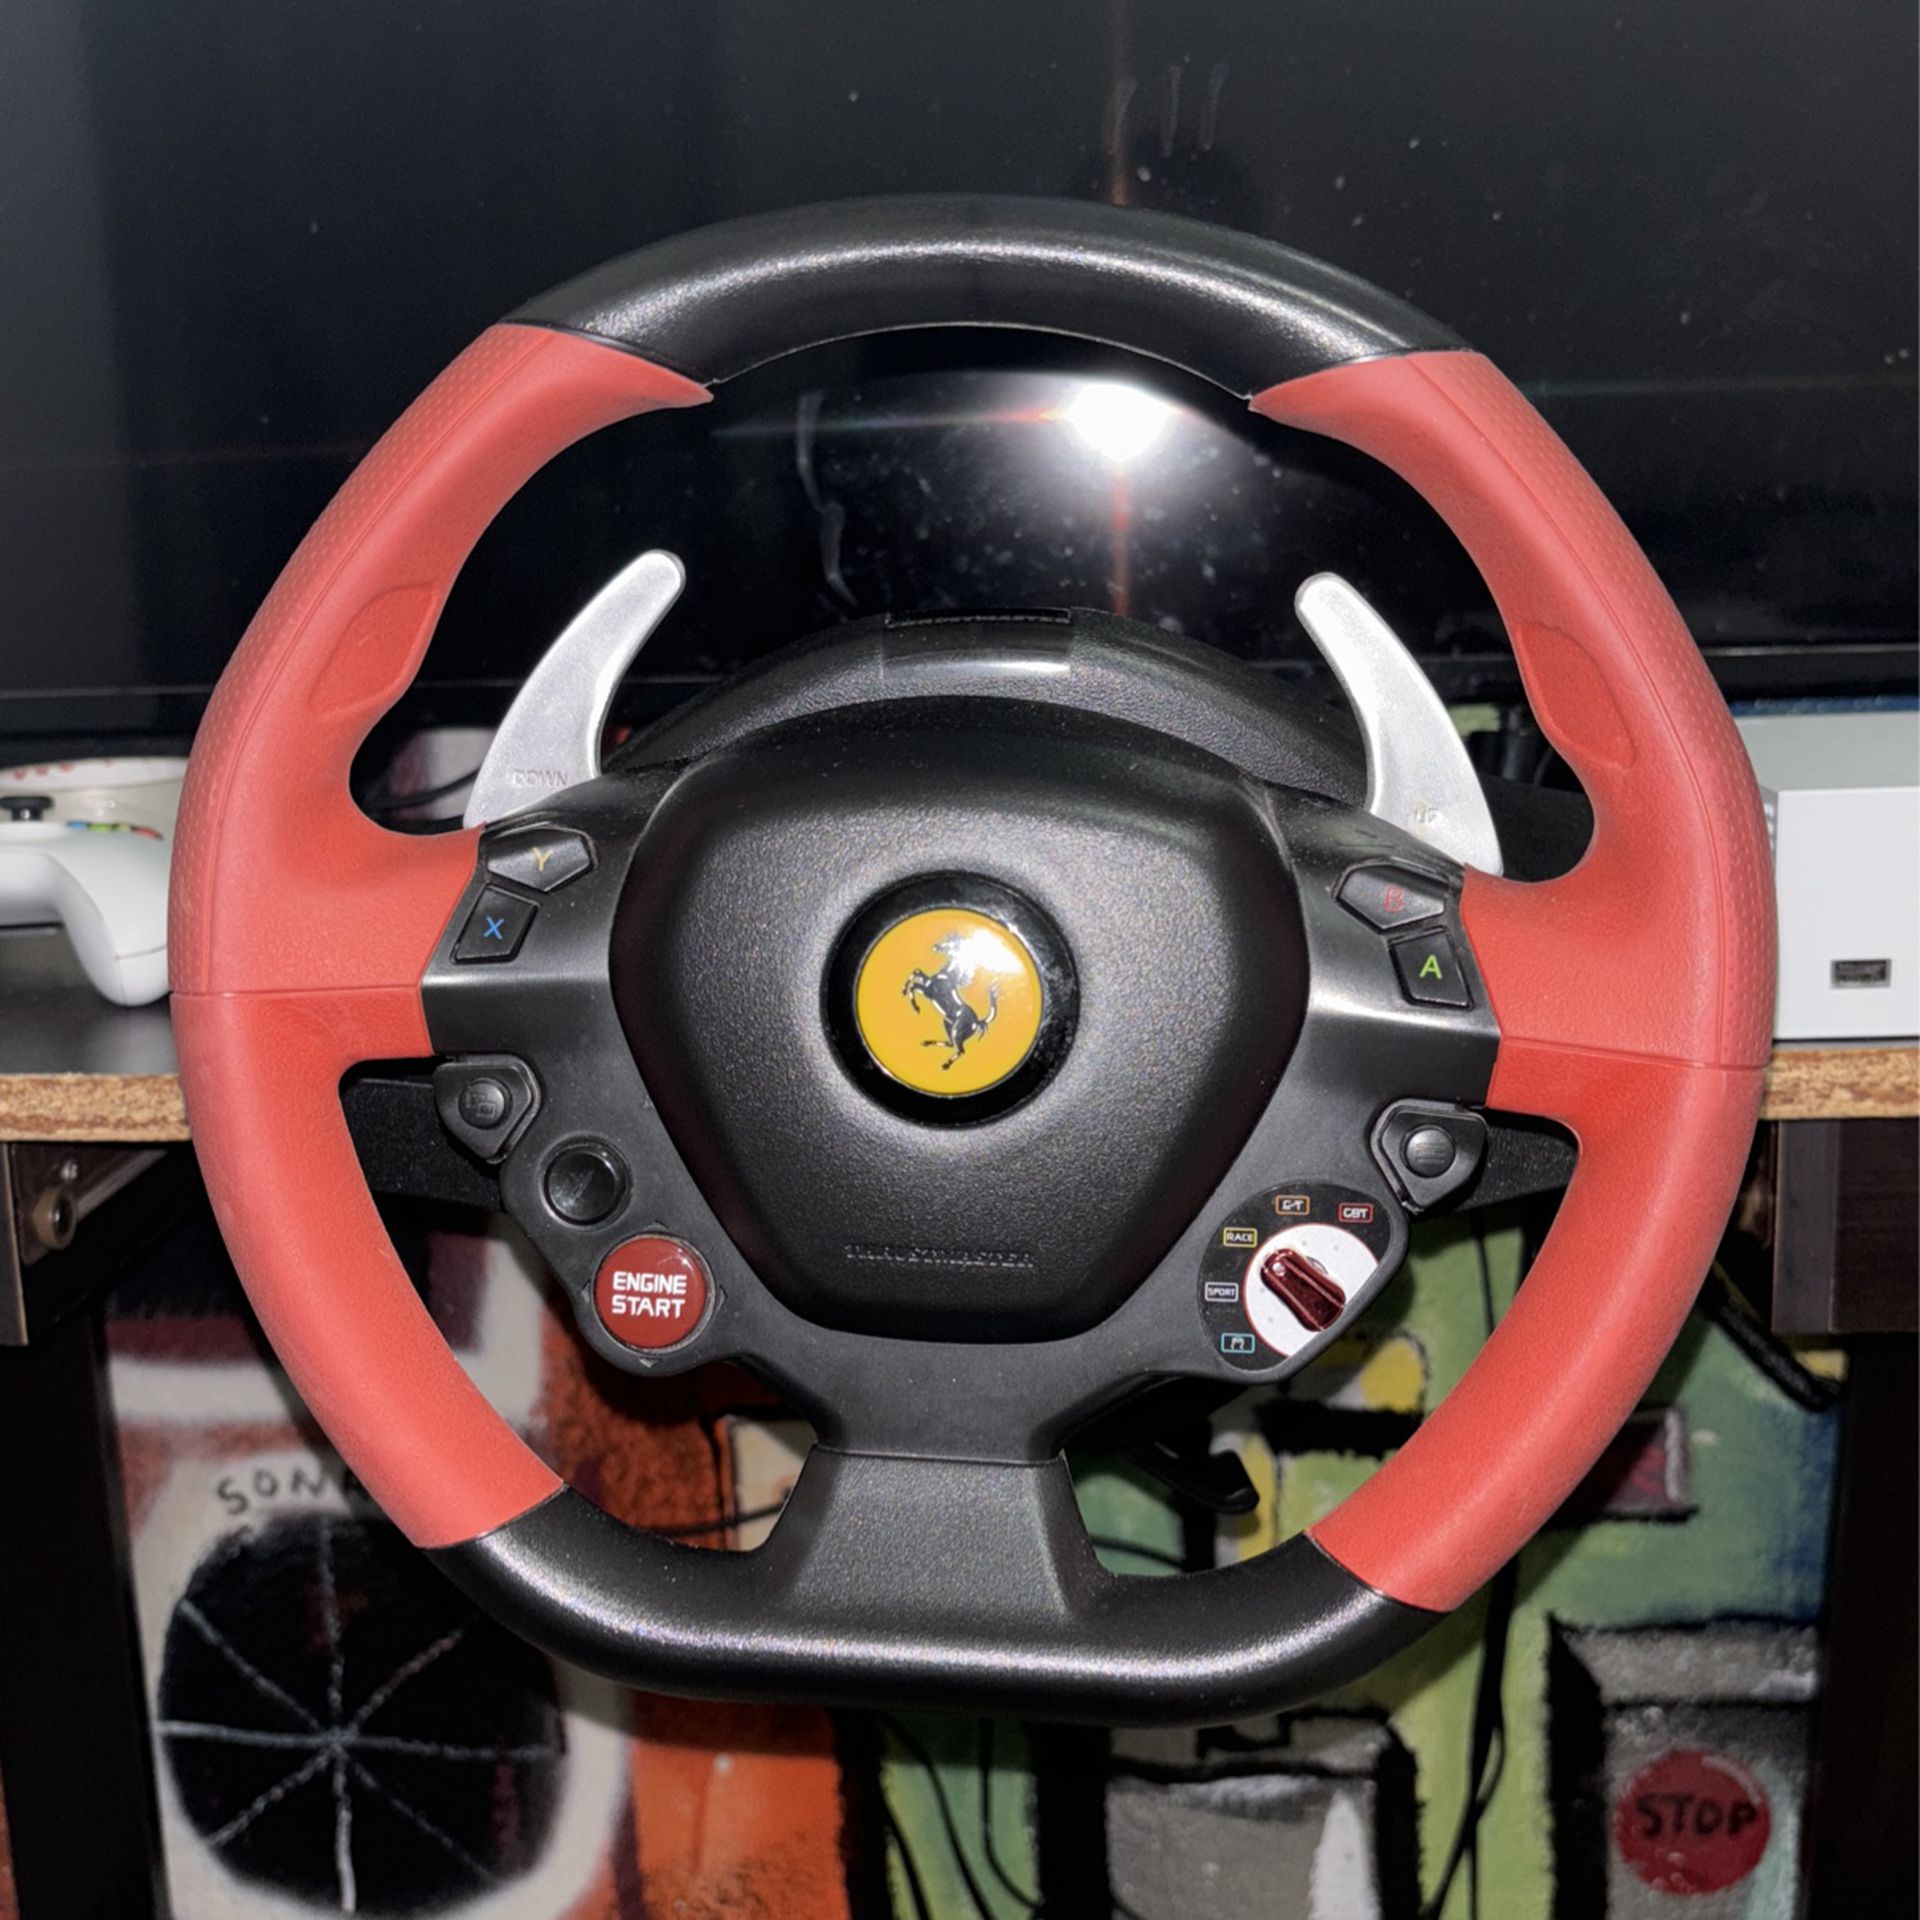 Xbox series X|S And One Thrustmaster Ferrari 458 Spider Racing Wheel